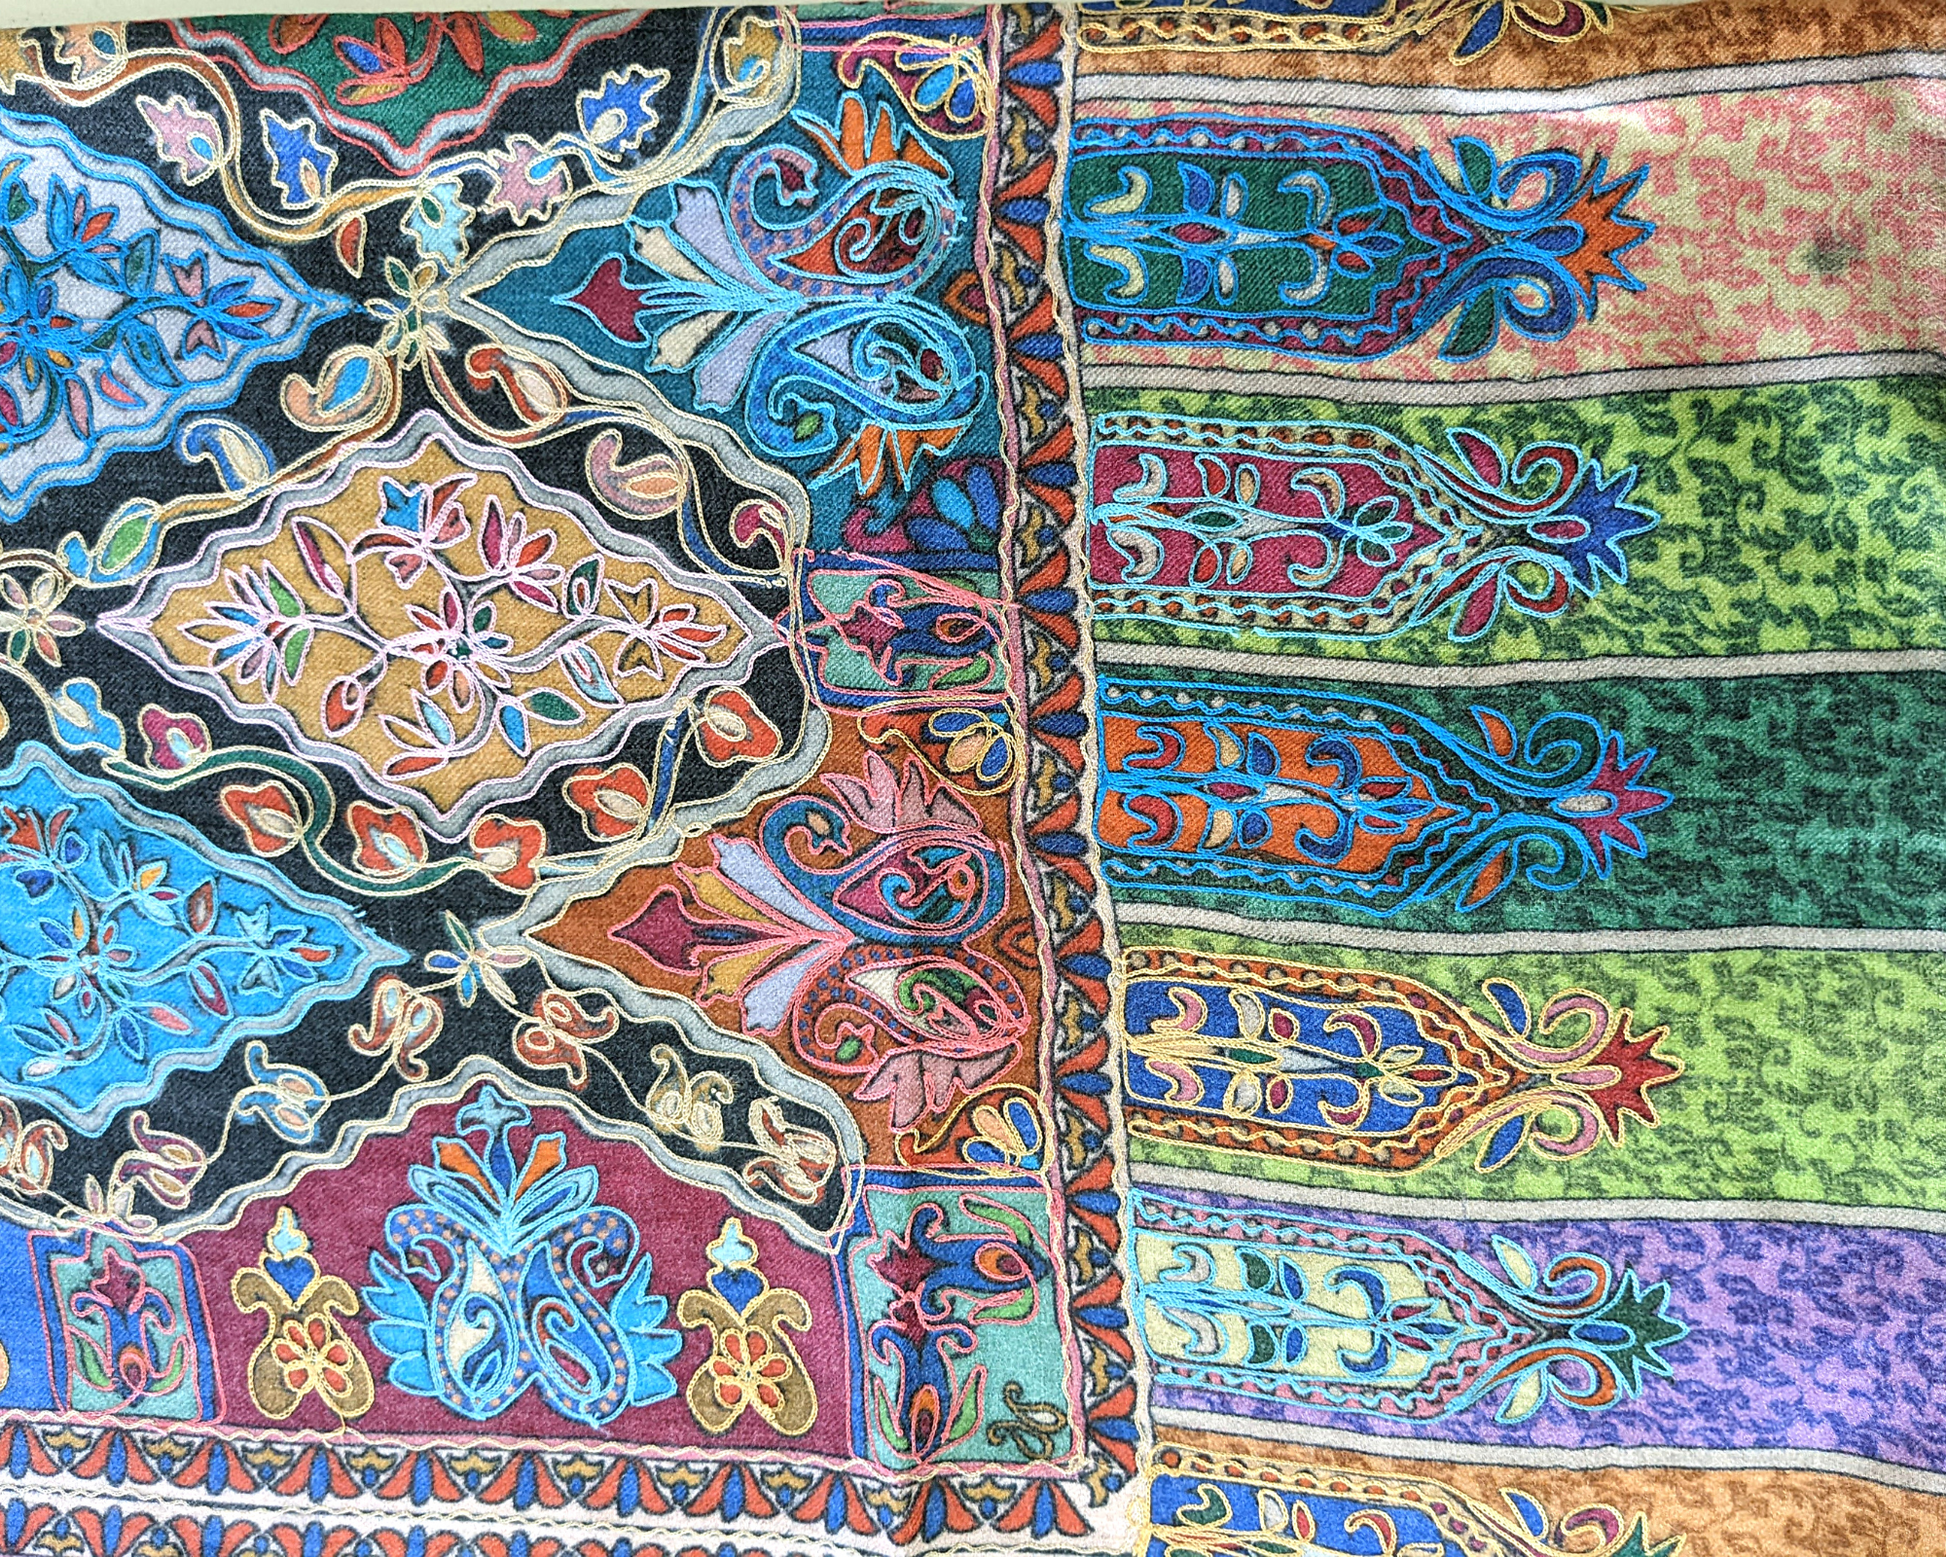 Kalamkari Pashmina Scarf & Shawl [Multicolor] - Craft Bazaar